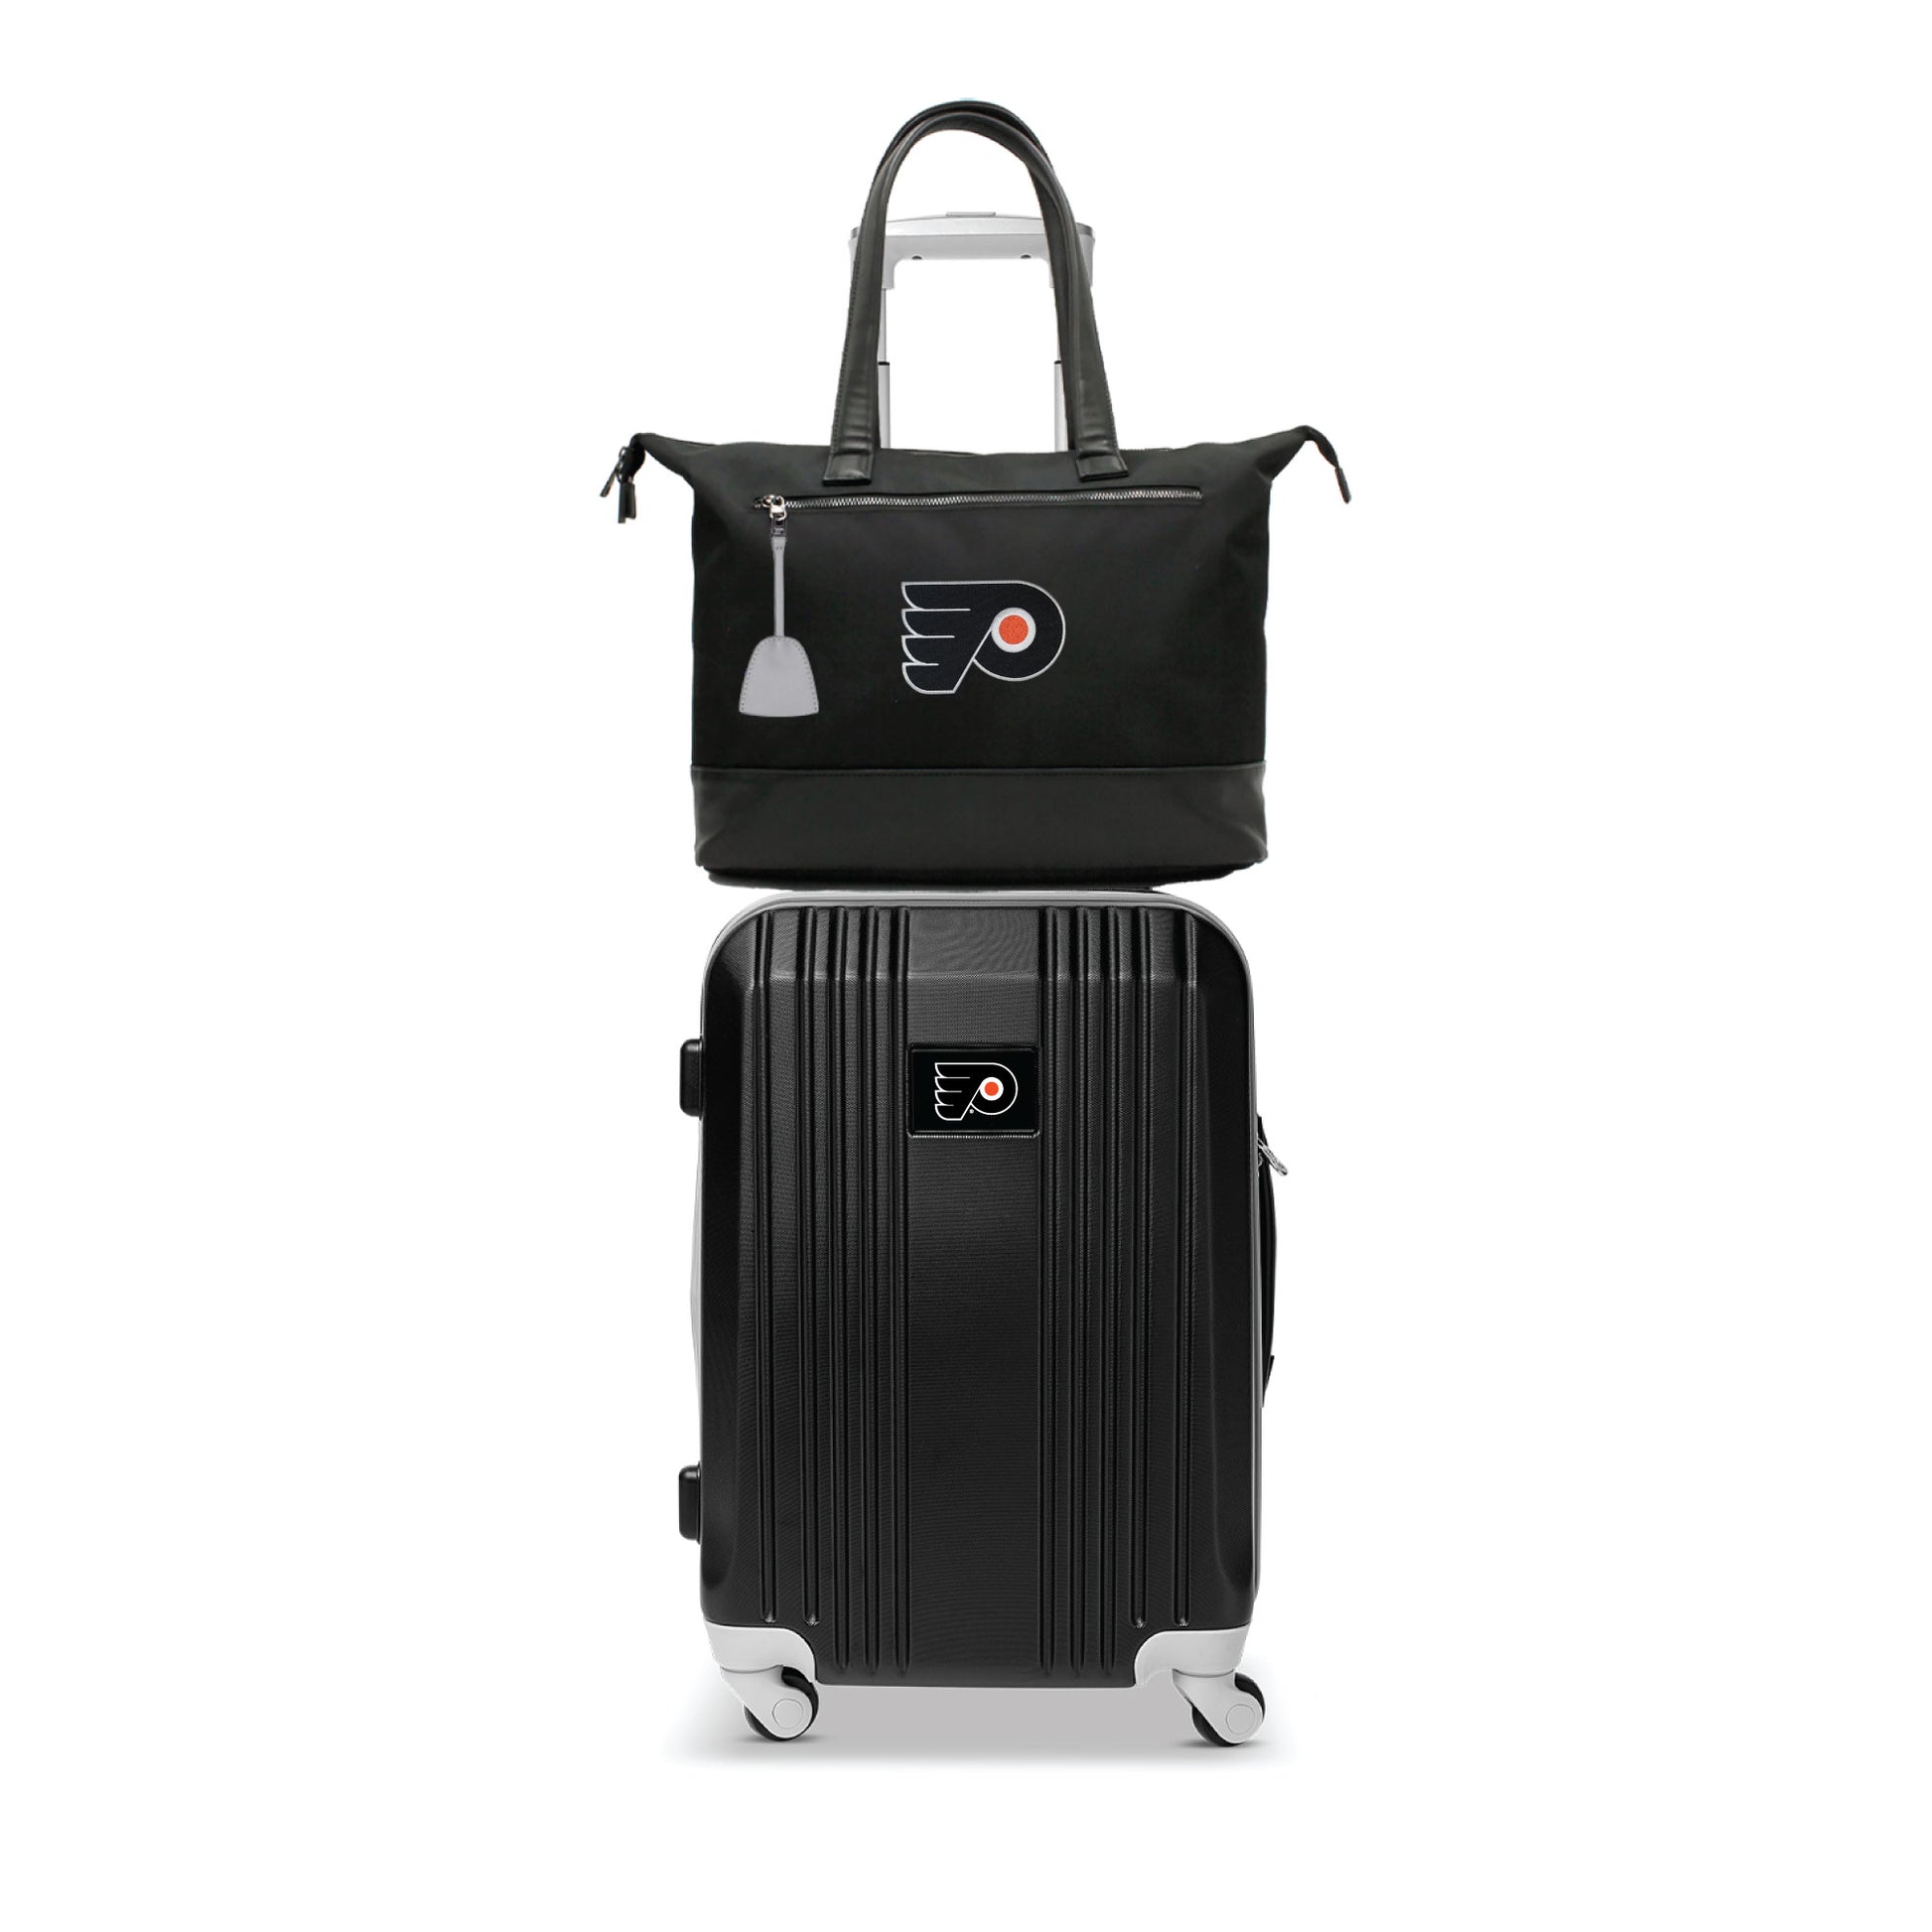 Philadelphia Flyers Premium Laptop Tote Bag and Luggage Set